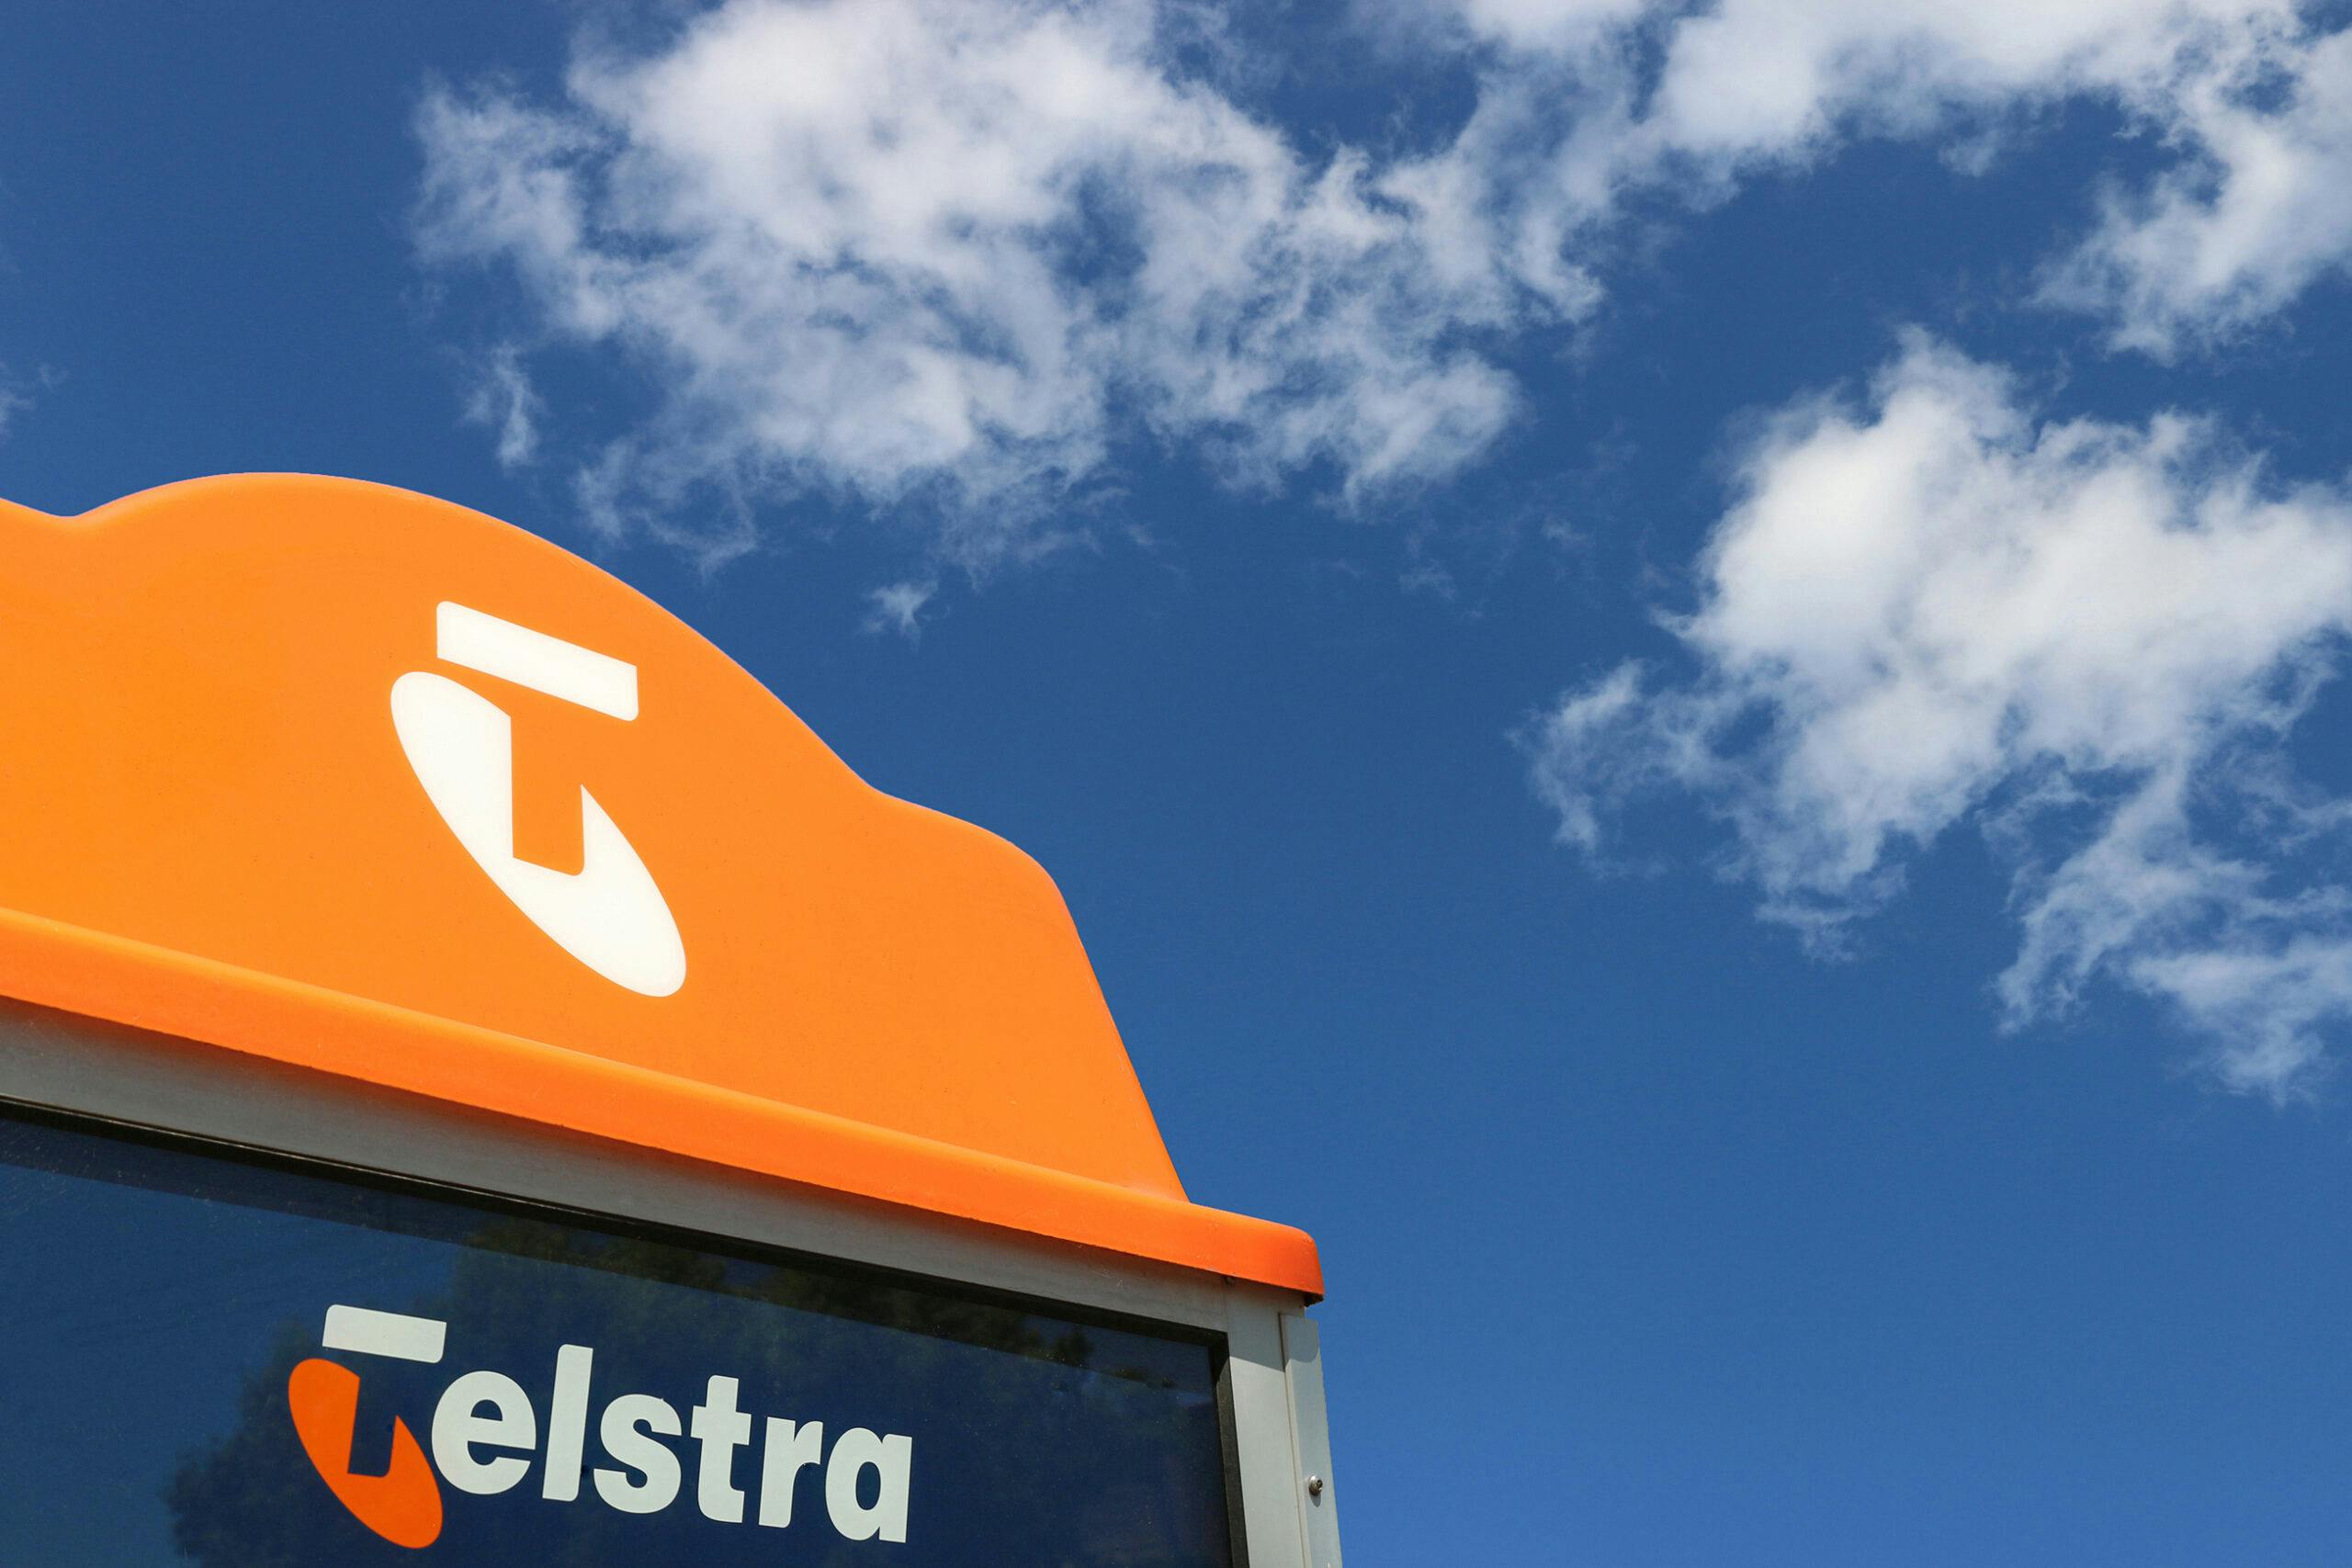 Telstra’s free data day debacle